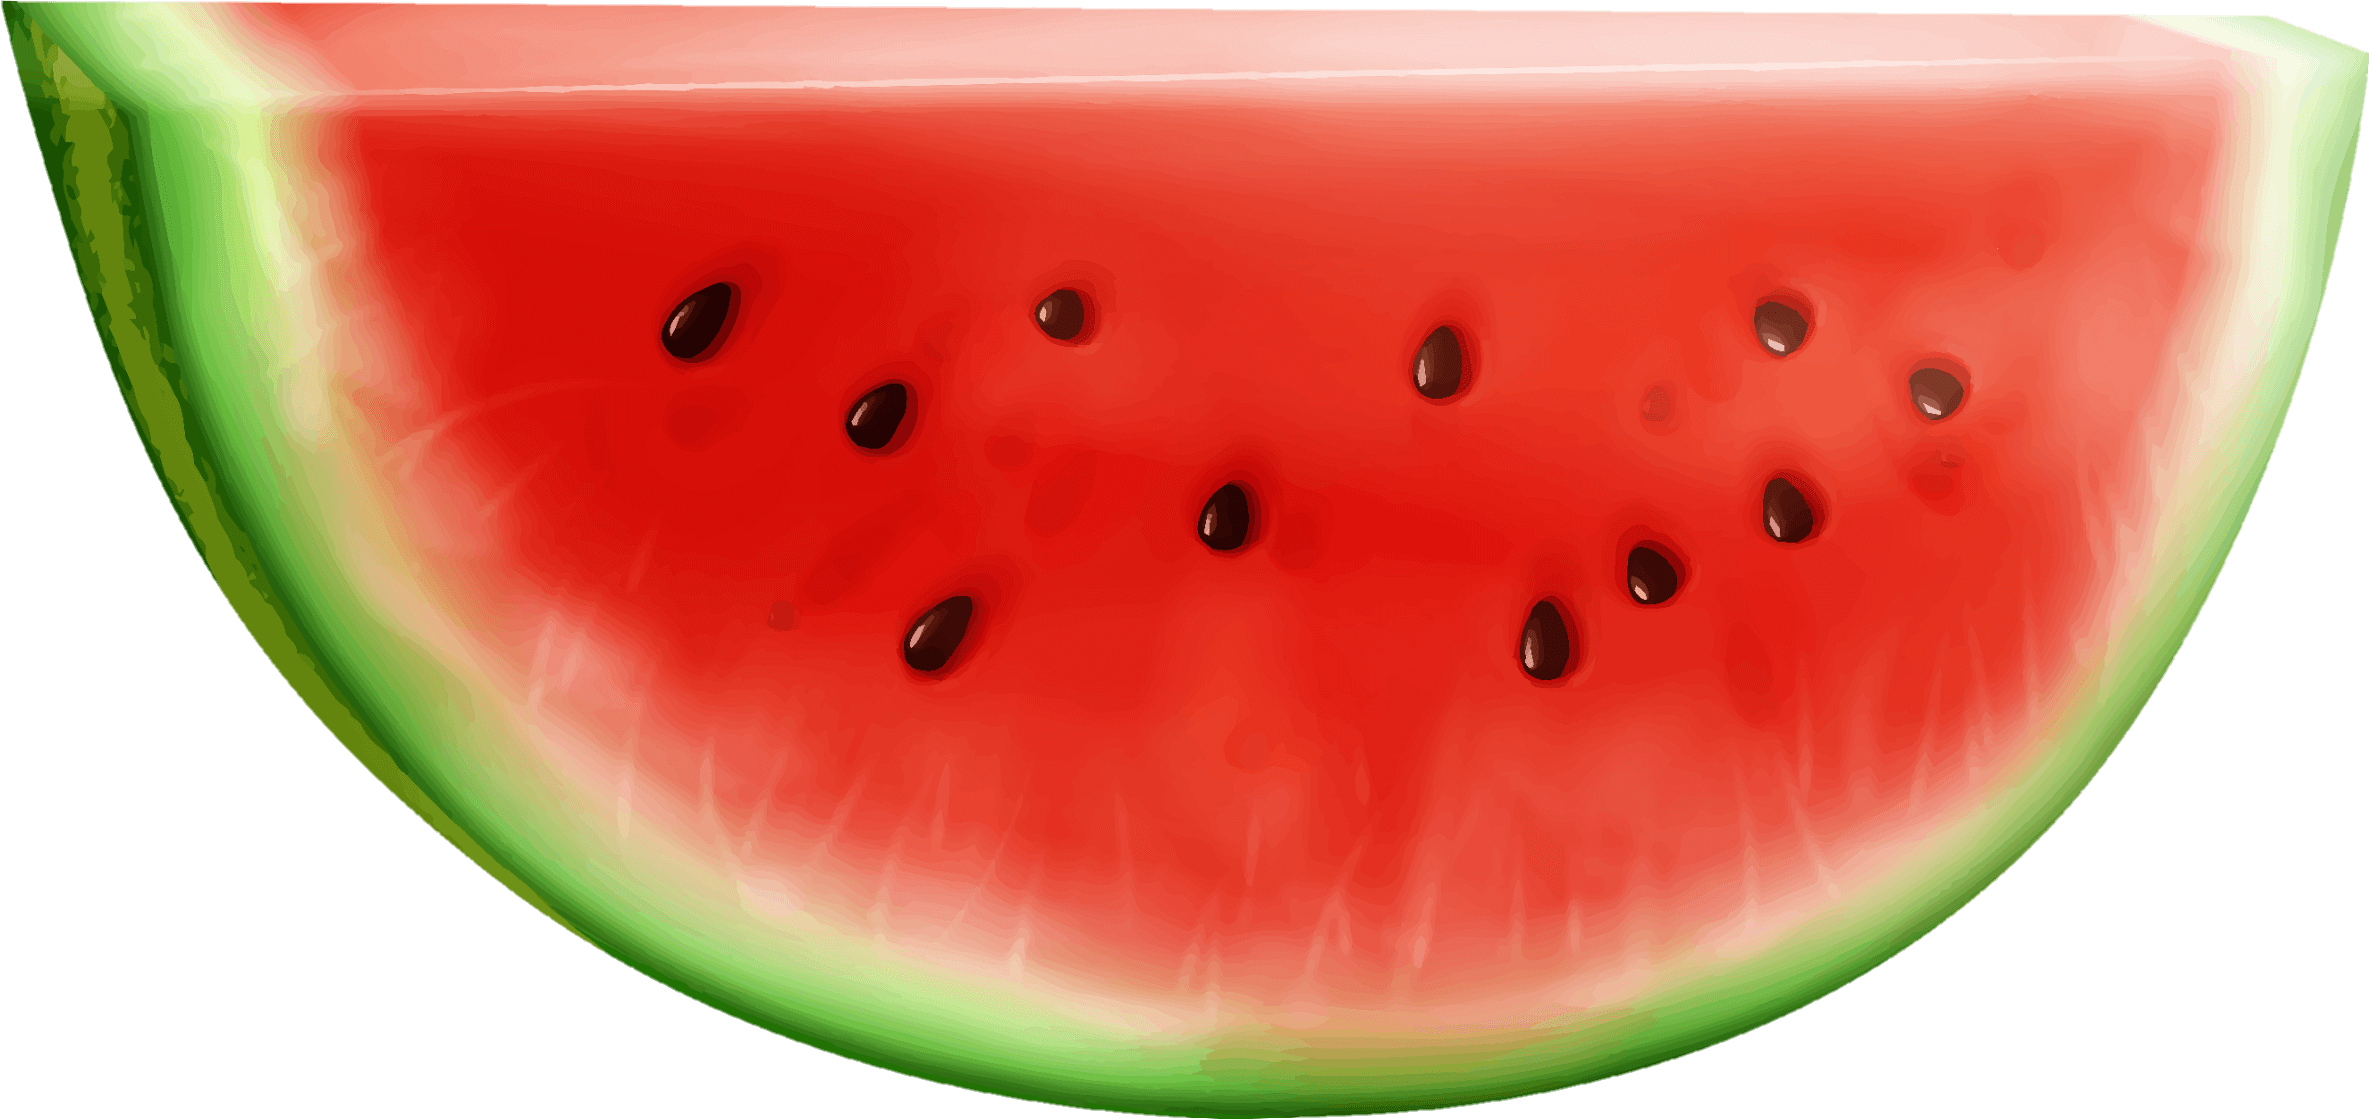 watermelon-9